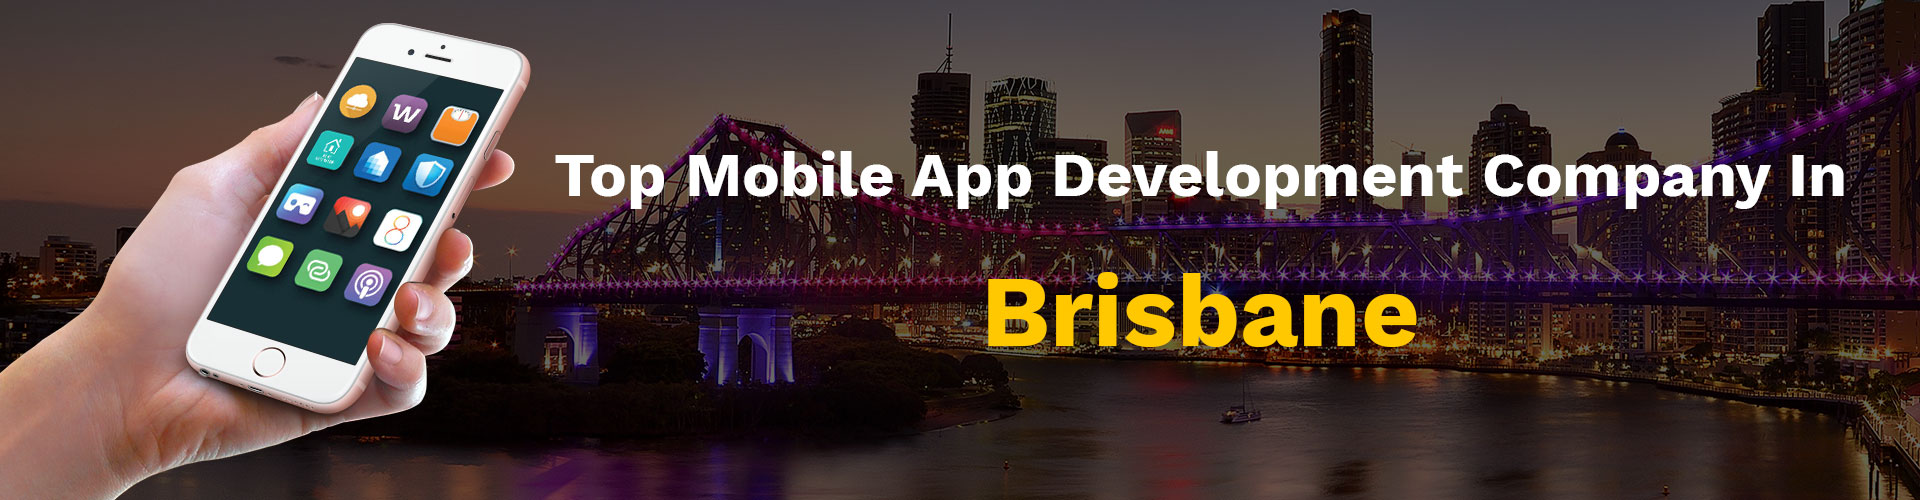 mobile app development company brisbane